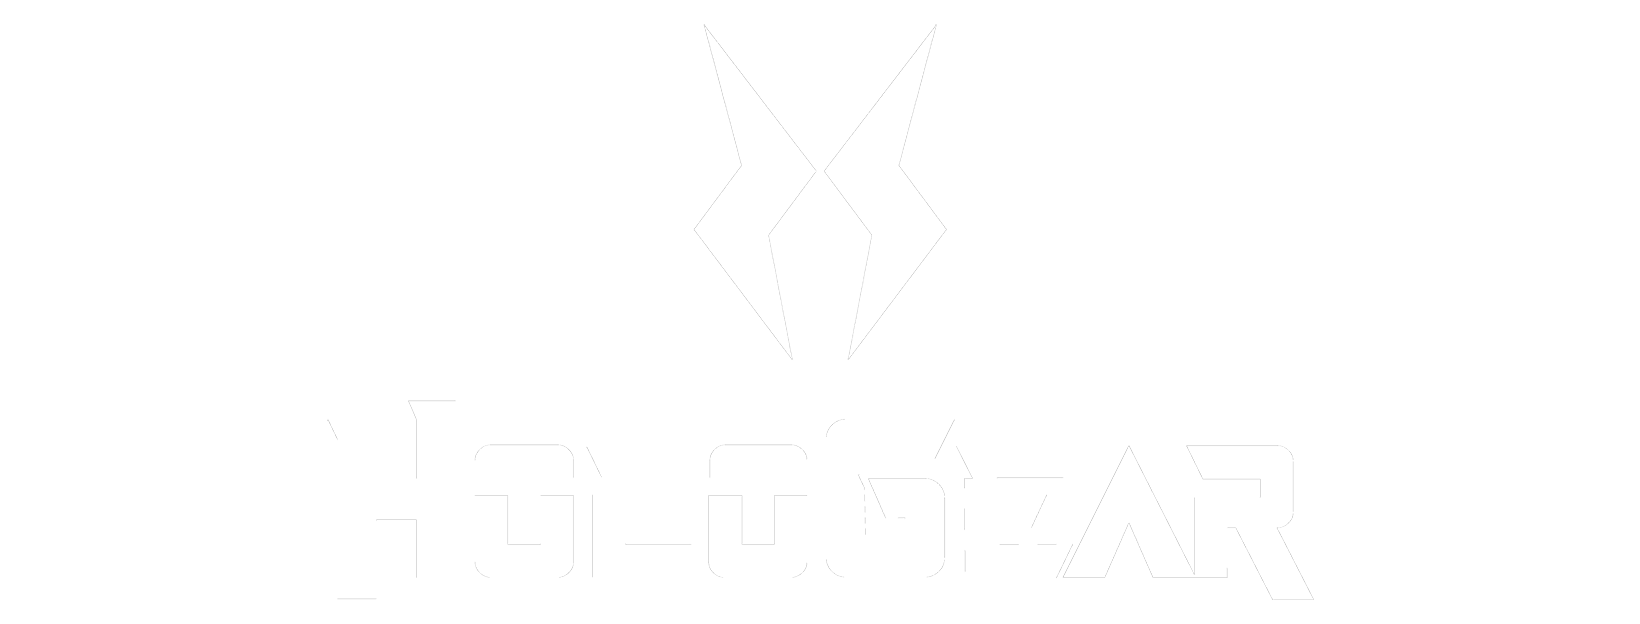 HoloGear logo